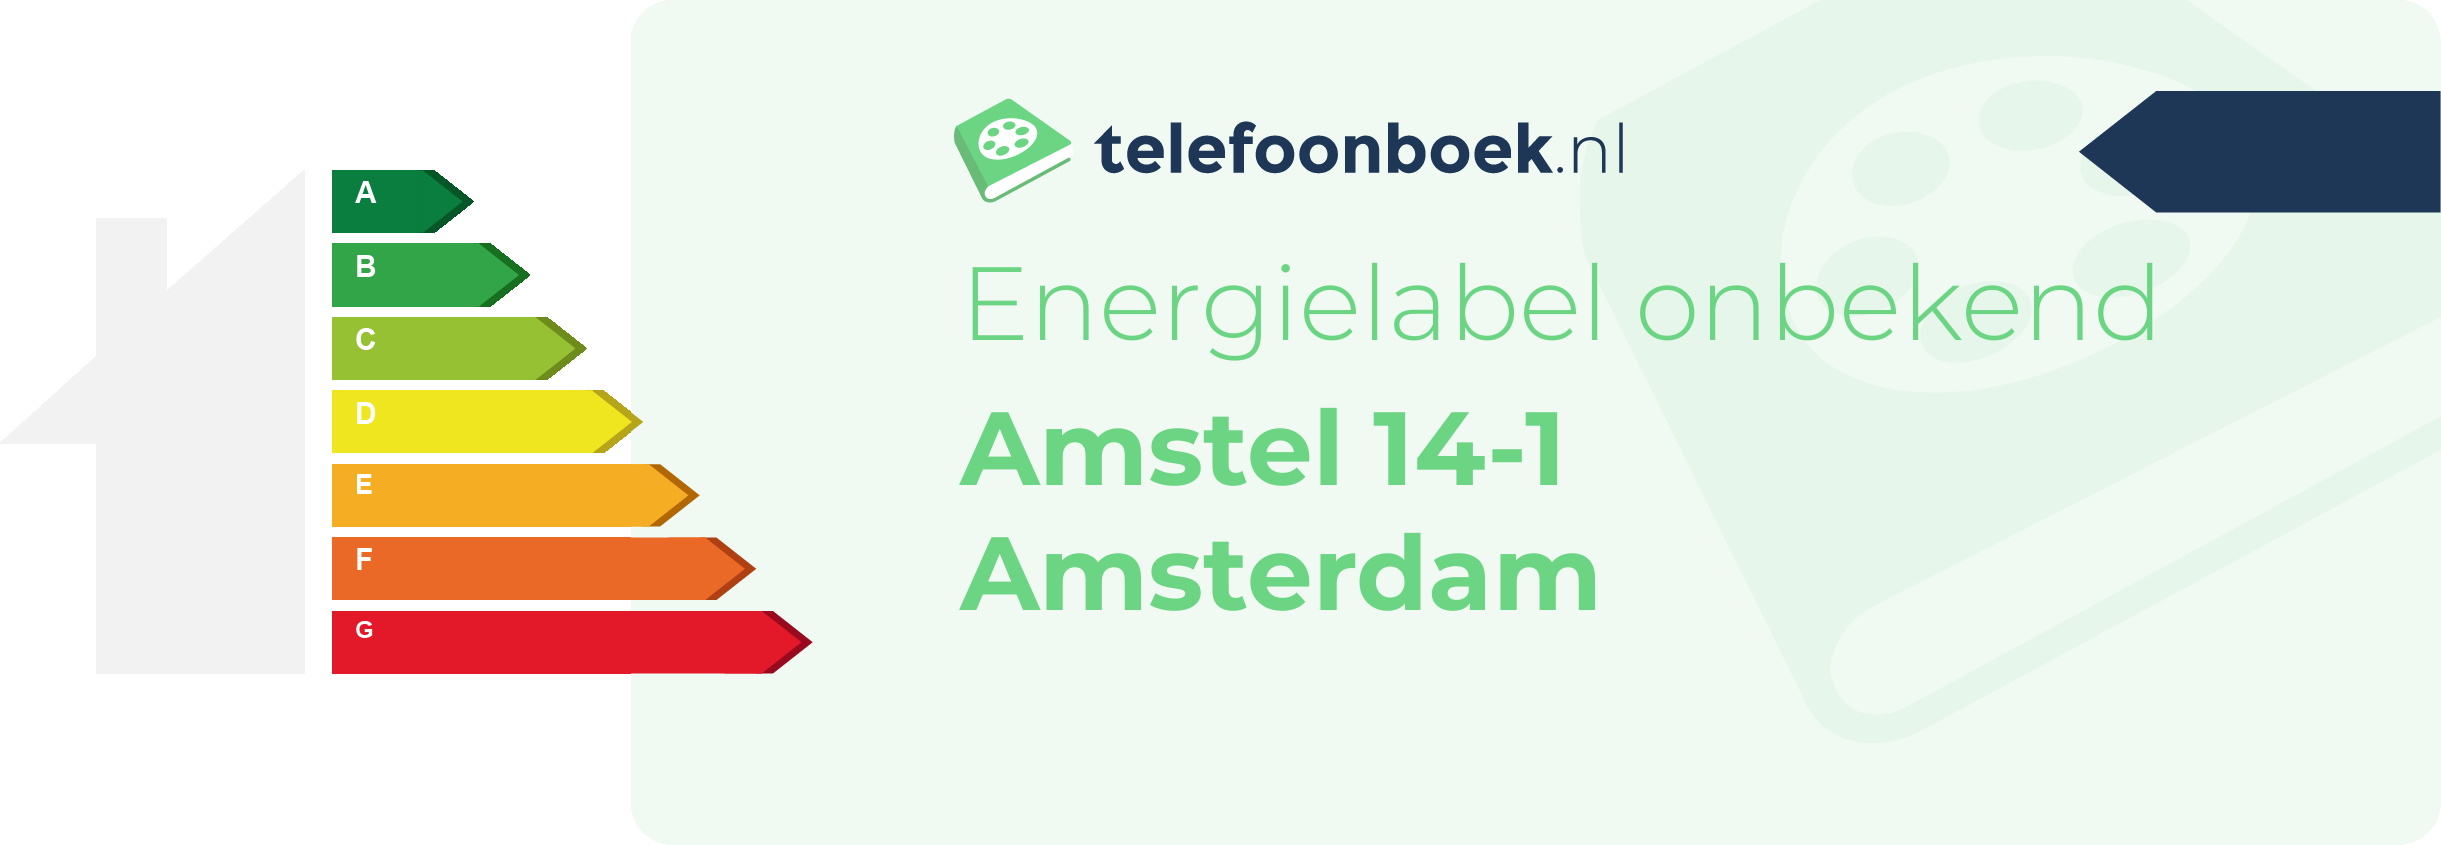 Energielabel Amstel 14-1 Amsterdam